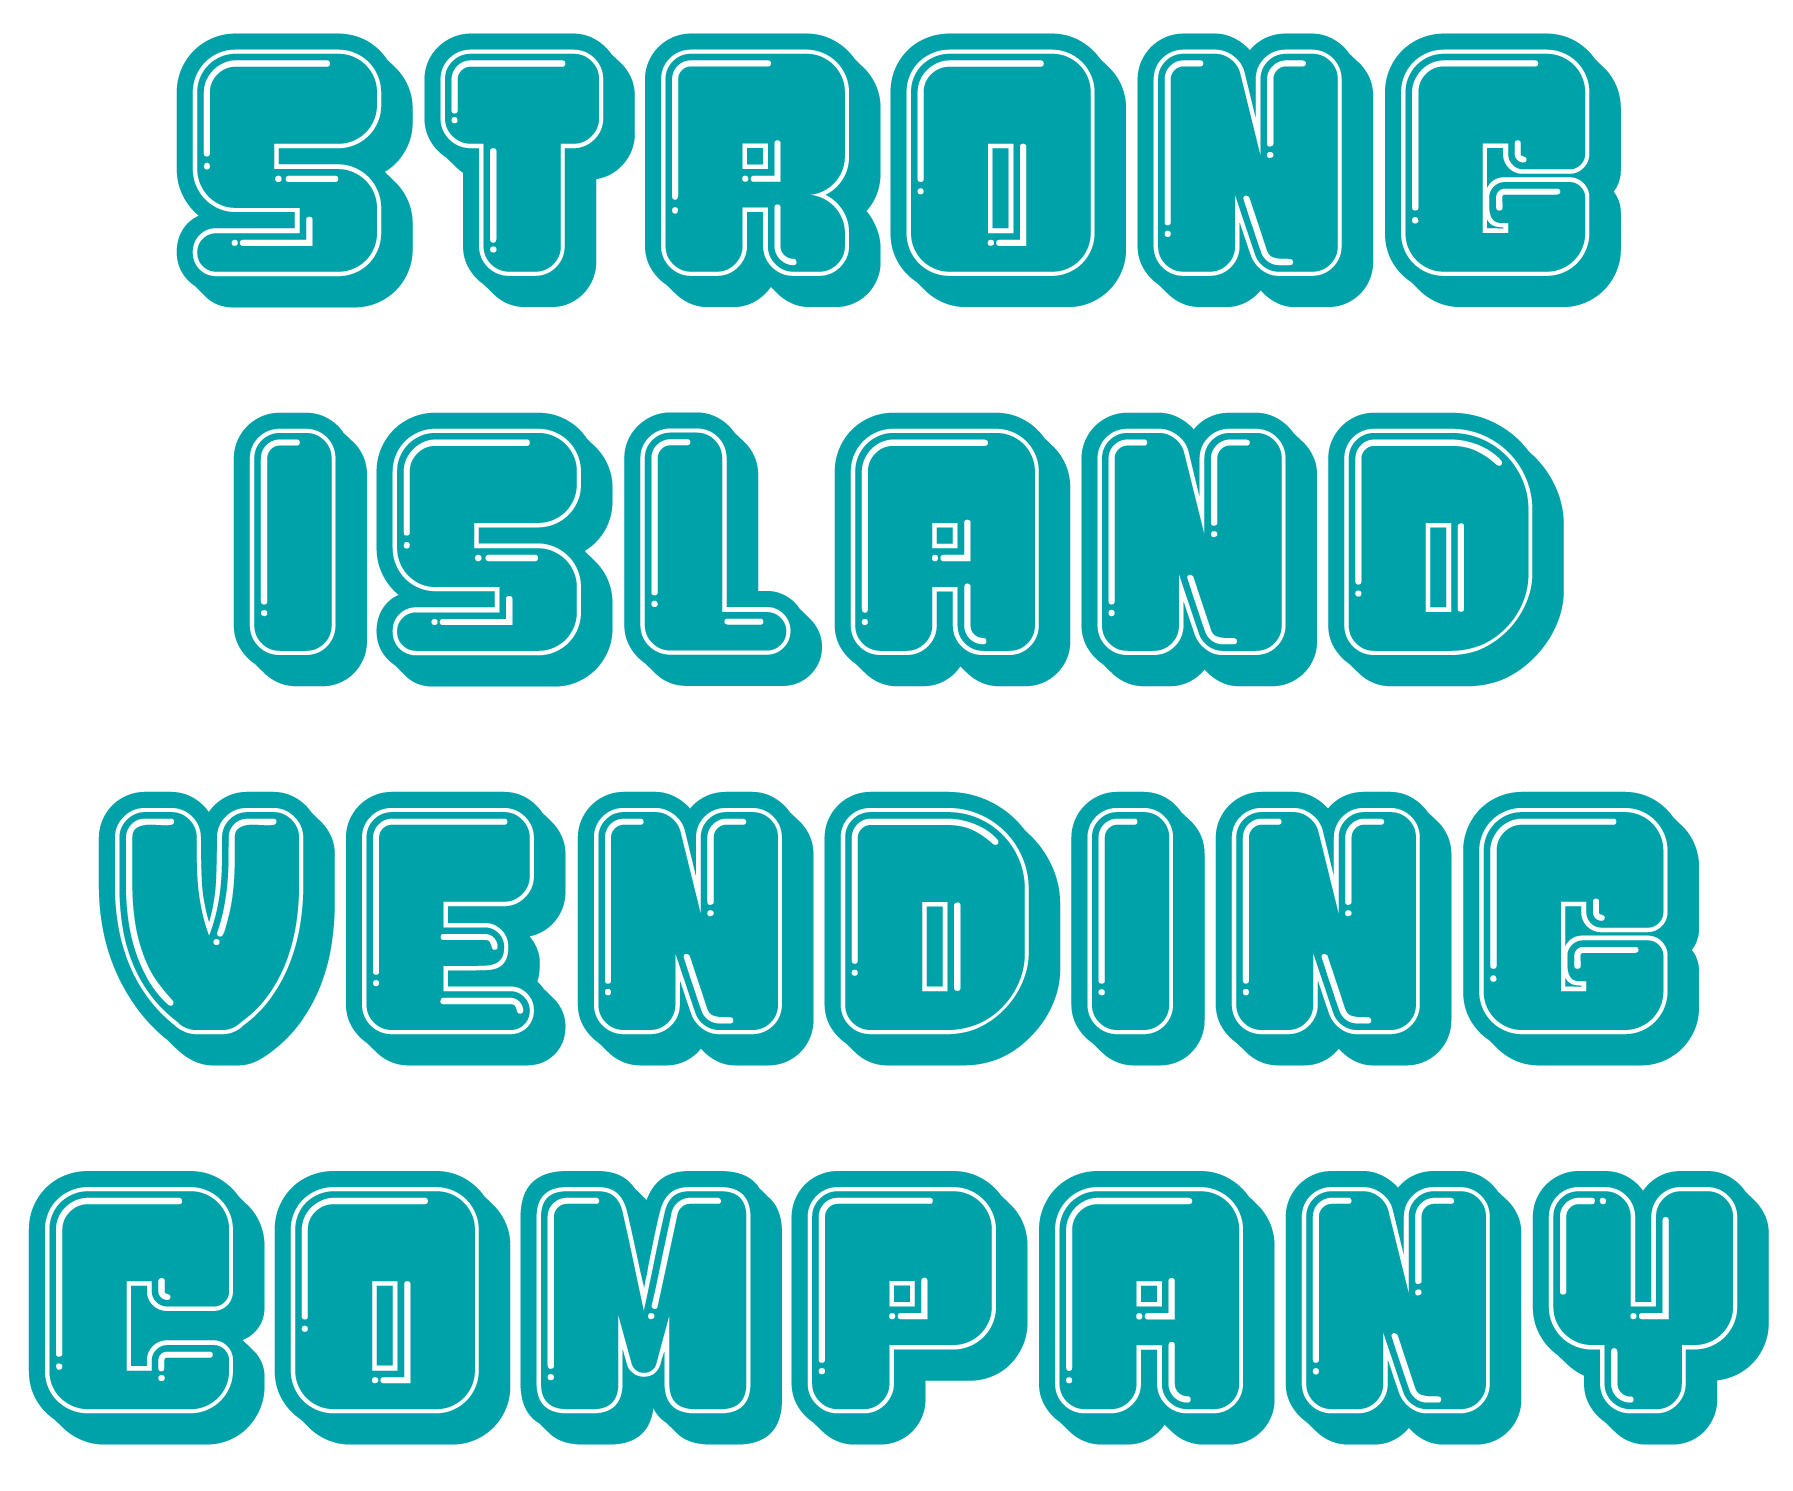 Strong island Vending Company